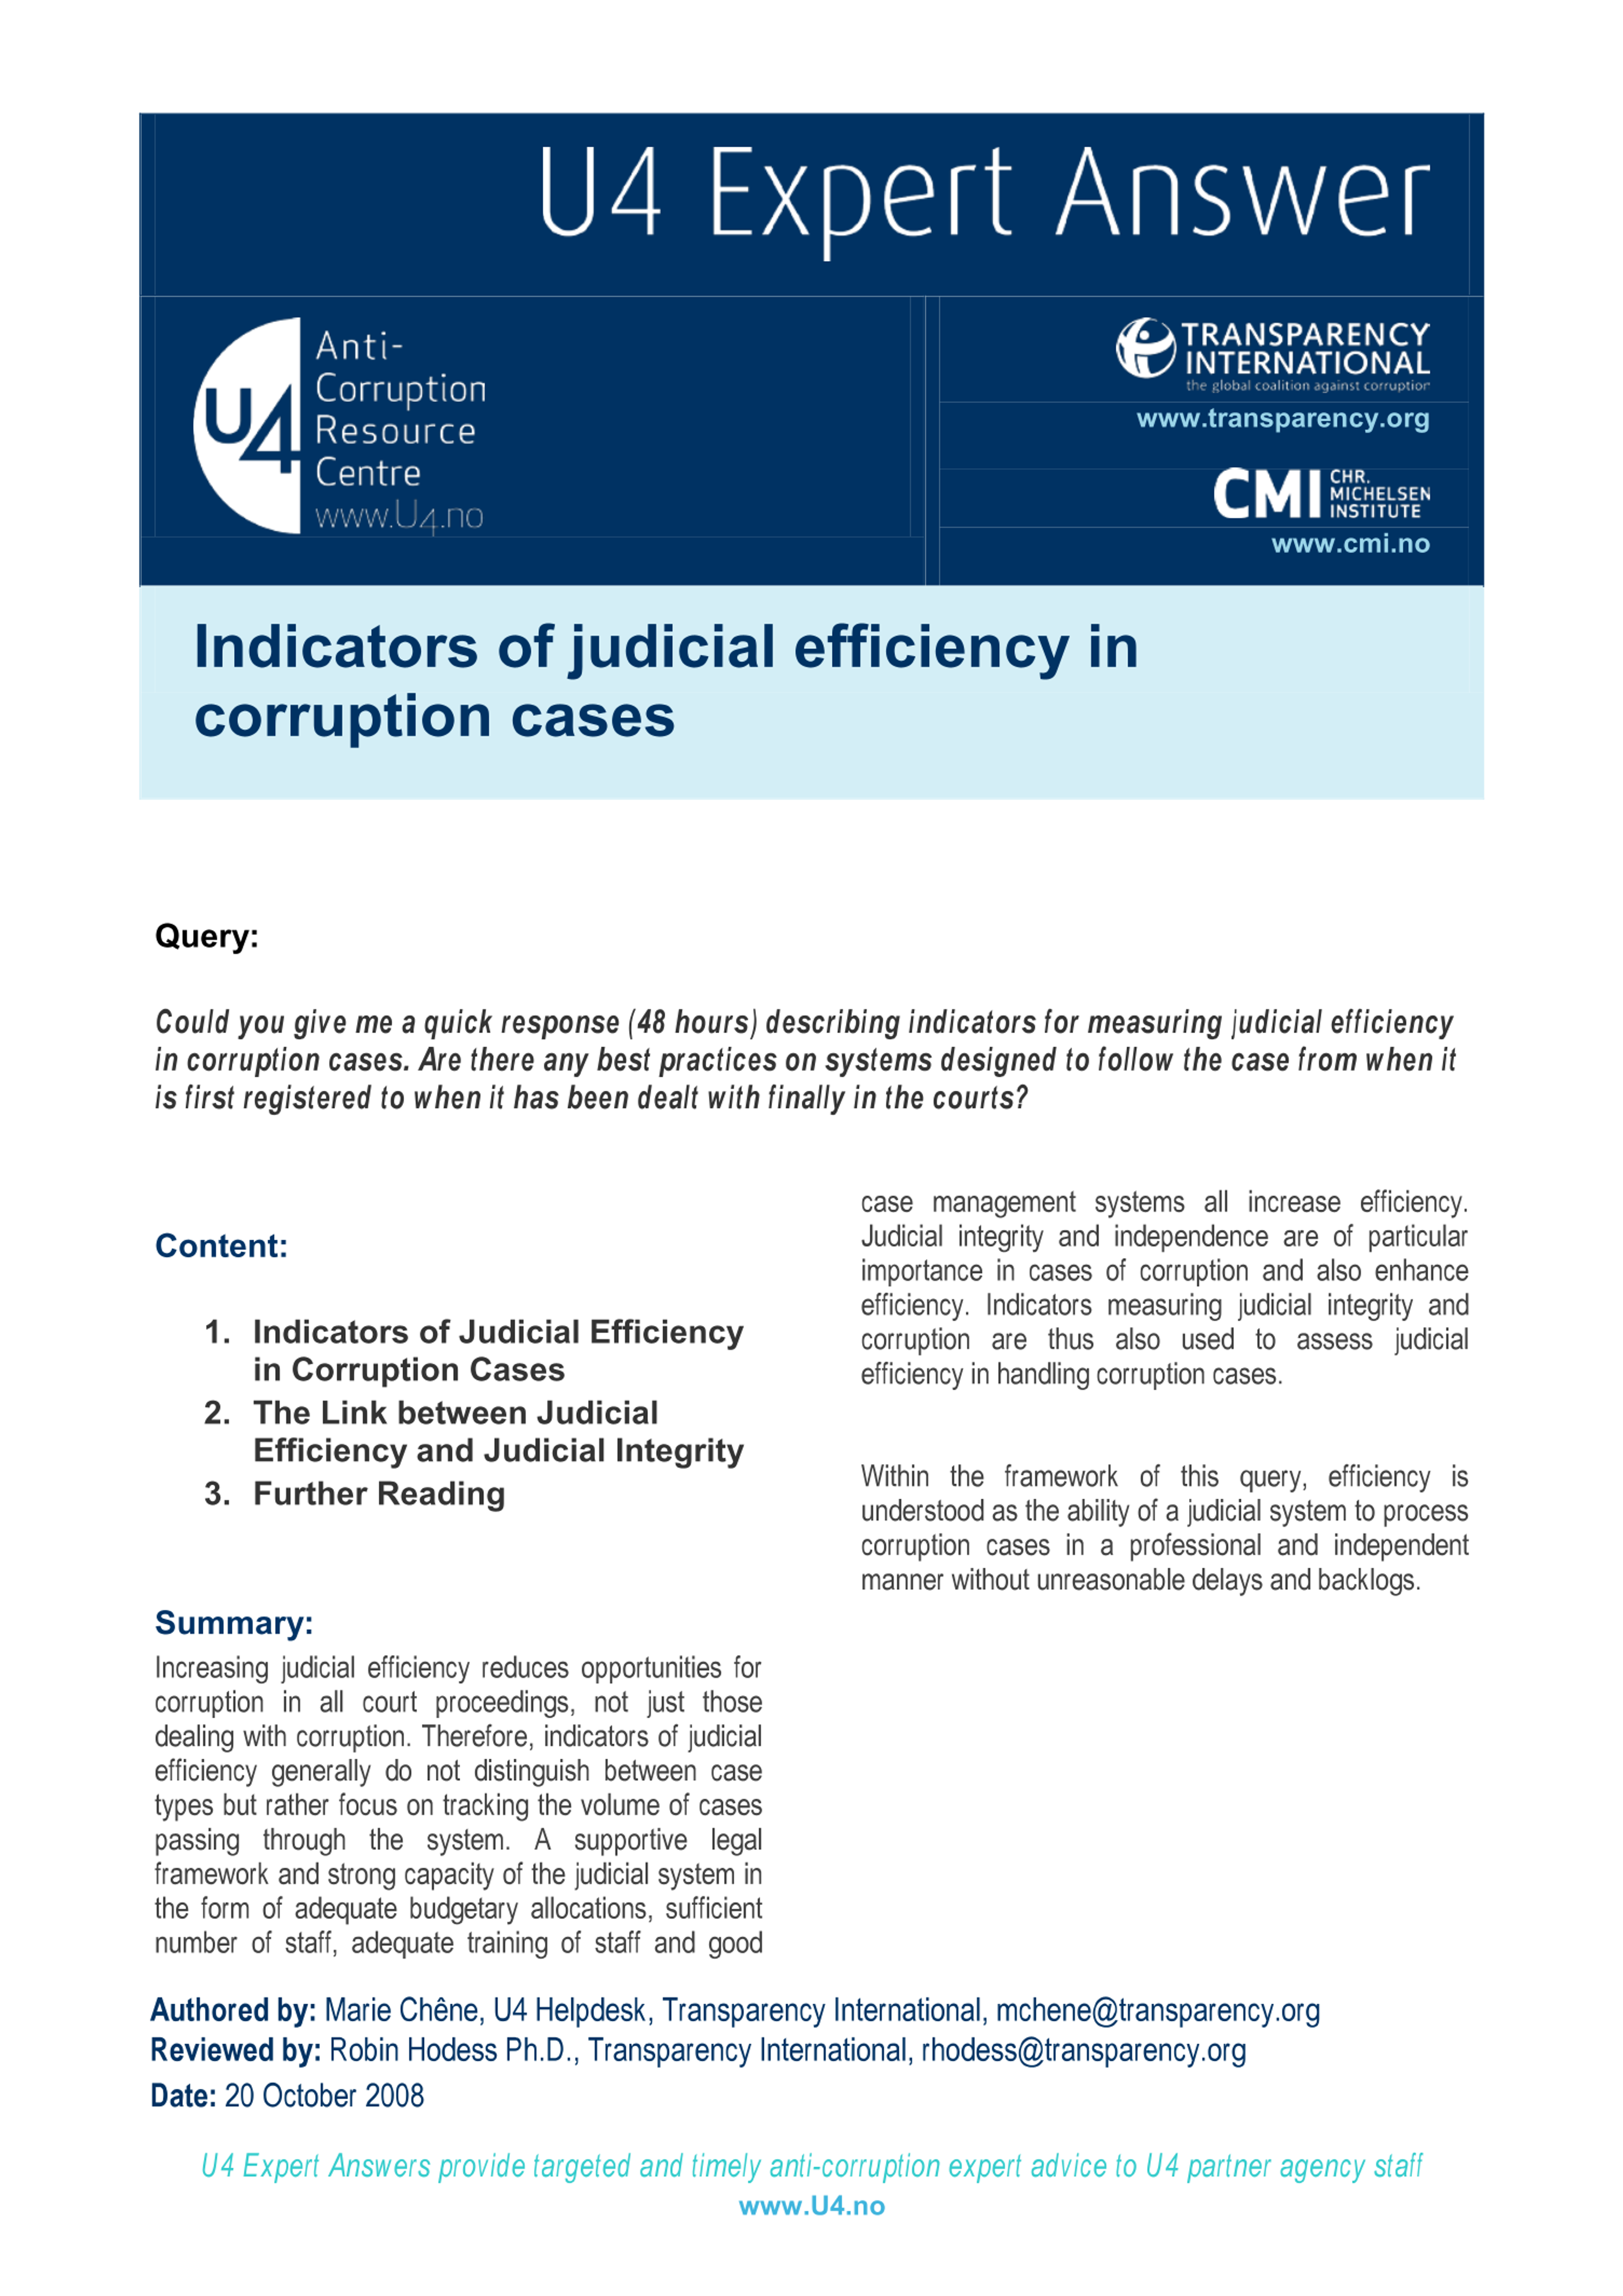 Indicators of judicial efficiency in corruption cases 